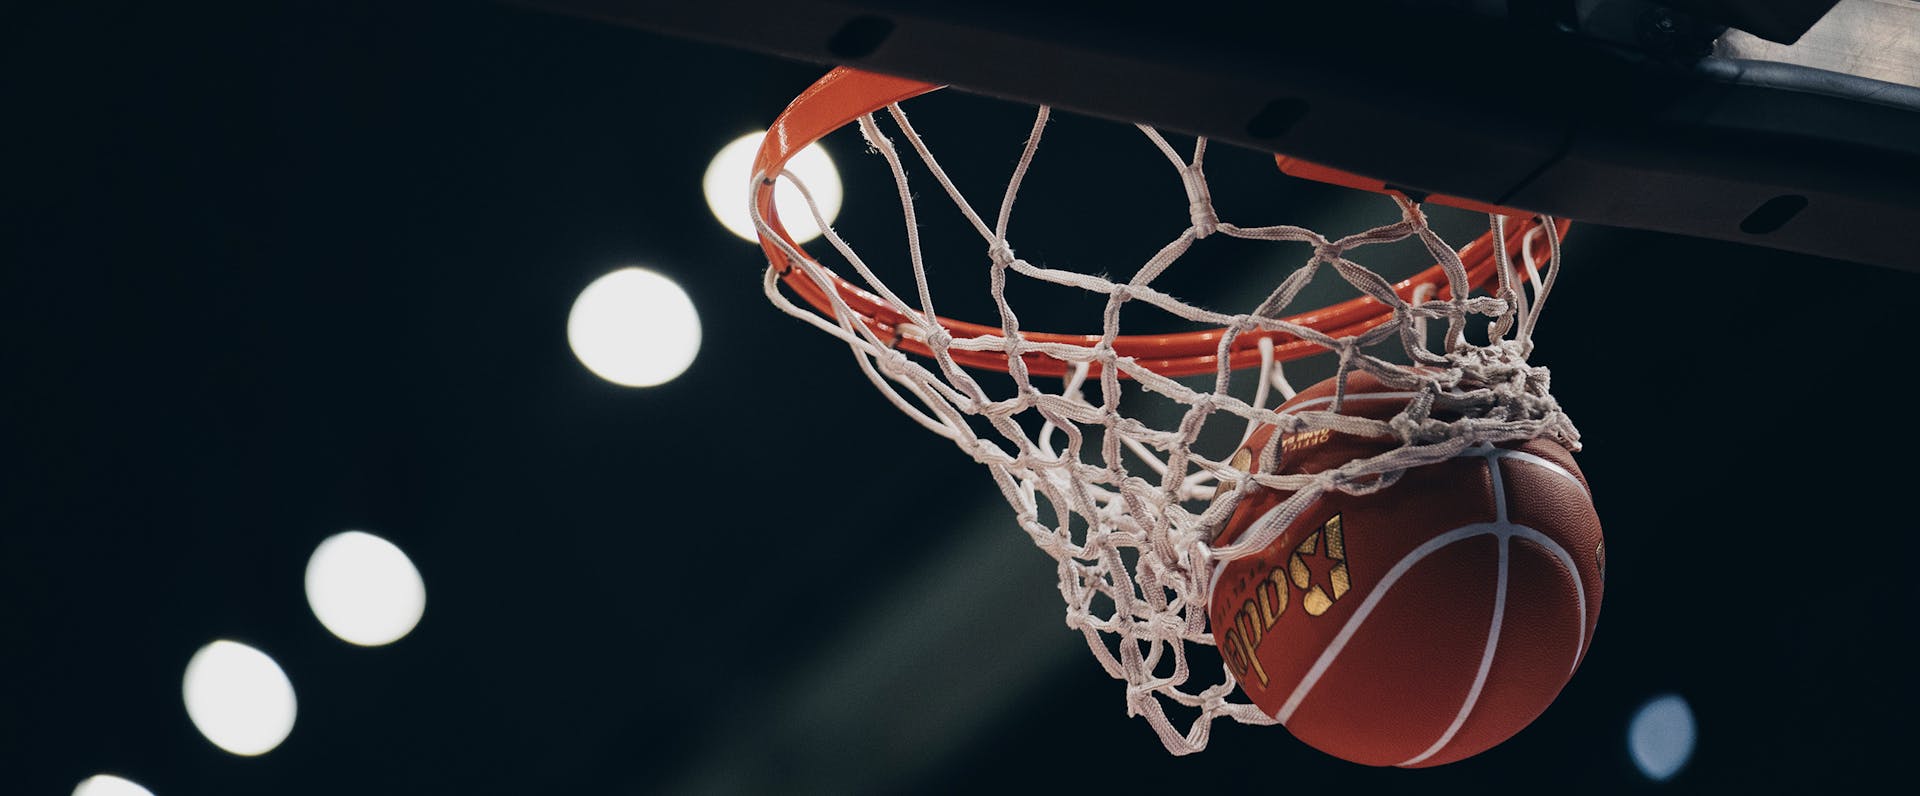 Basketball falling through net